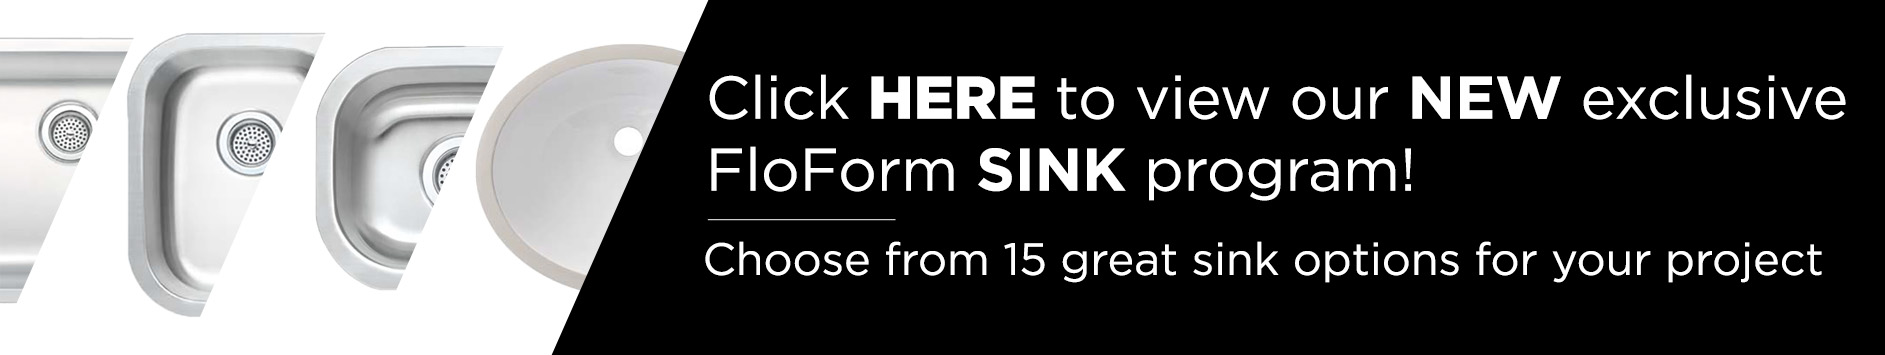 floform sink program banner shows 4 stainless steel sinks